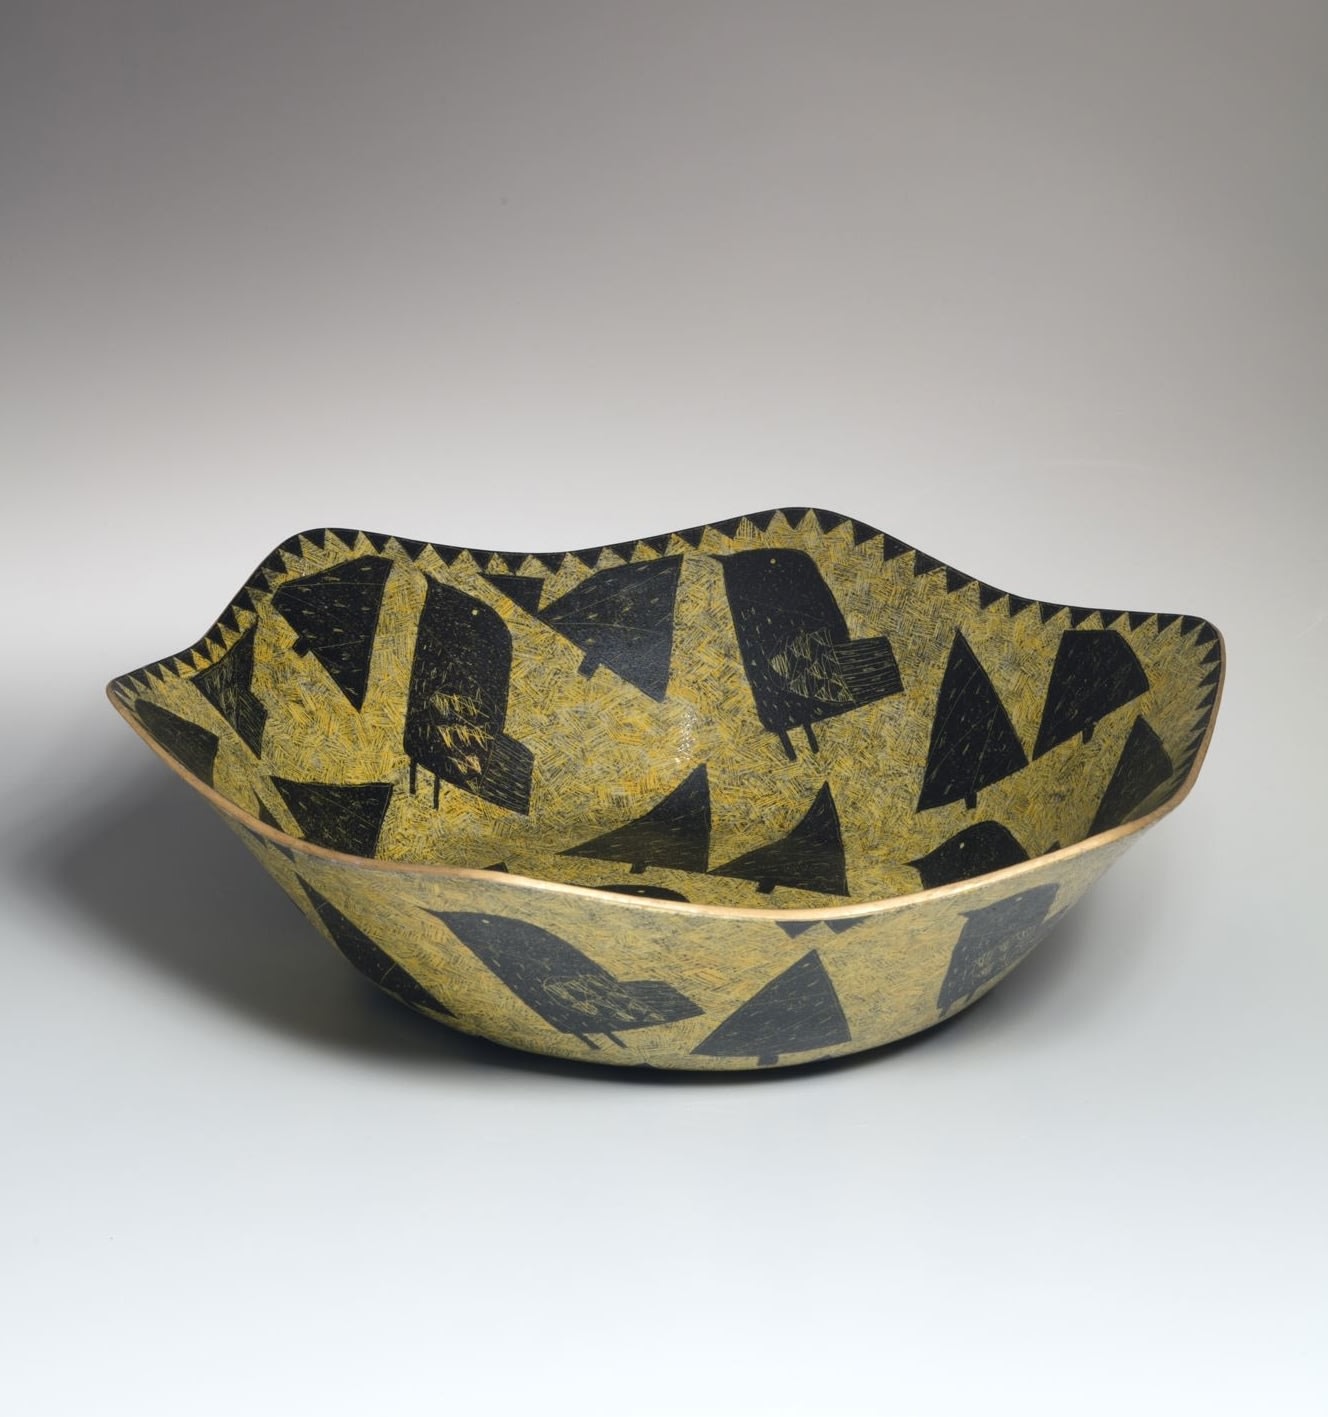 Large, hexagonal foliated bowl with black bird pattern set against a lemon yellow ground, 1999